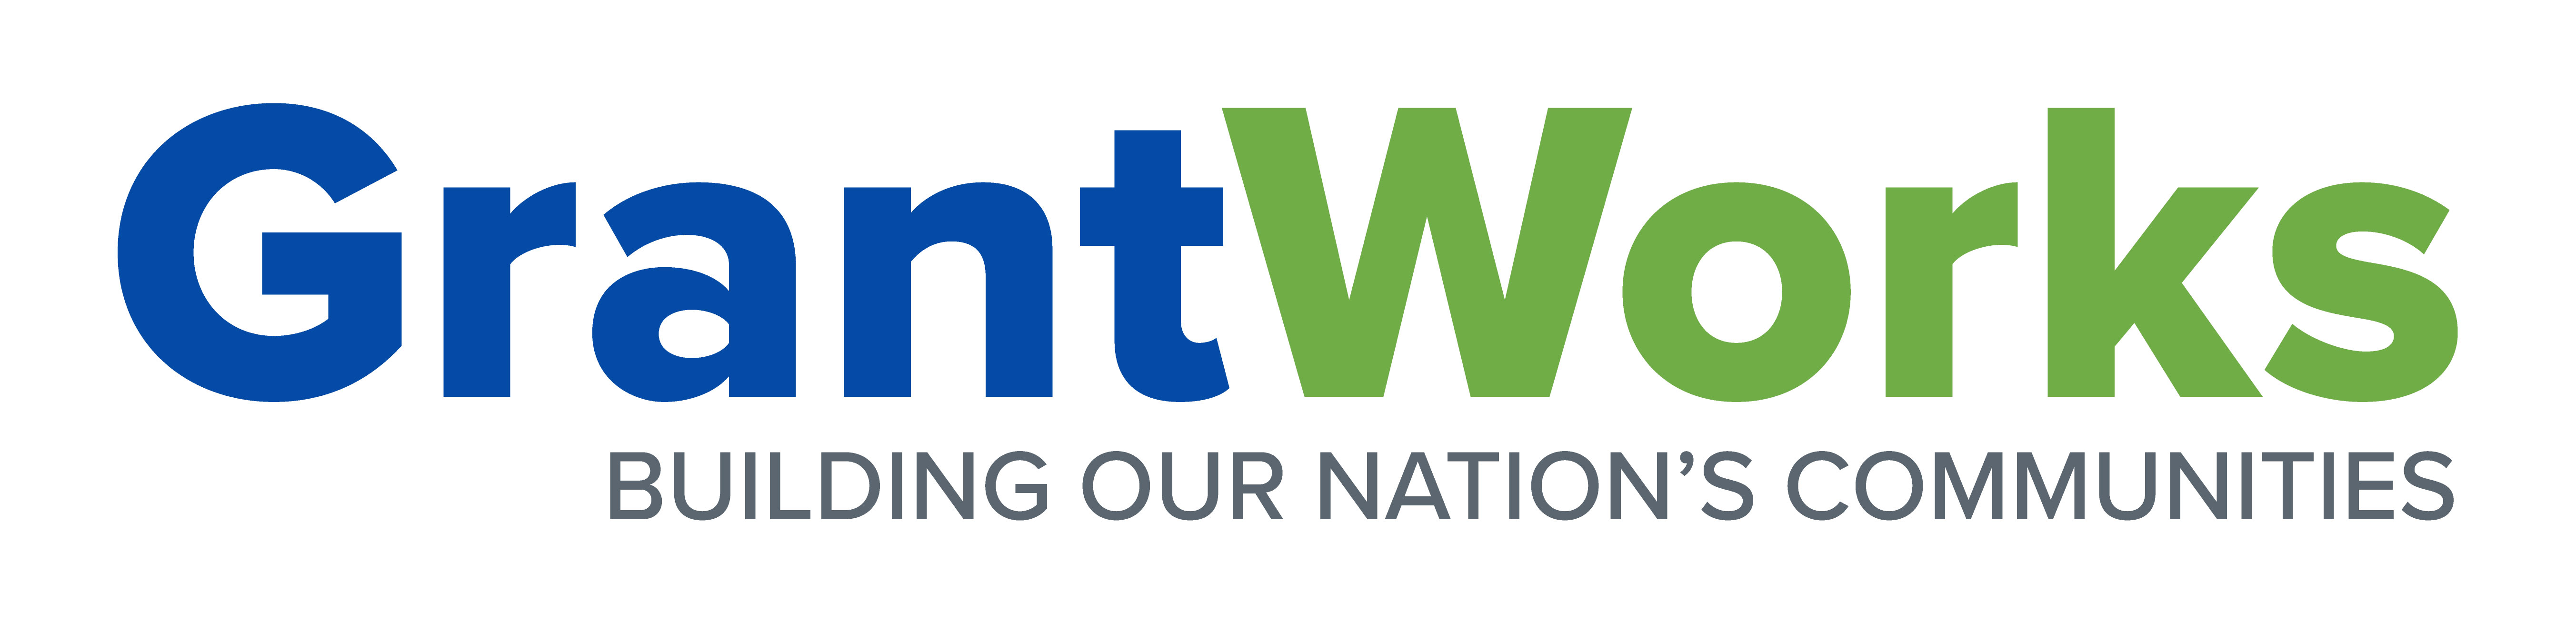 GrantWorks Company logo